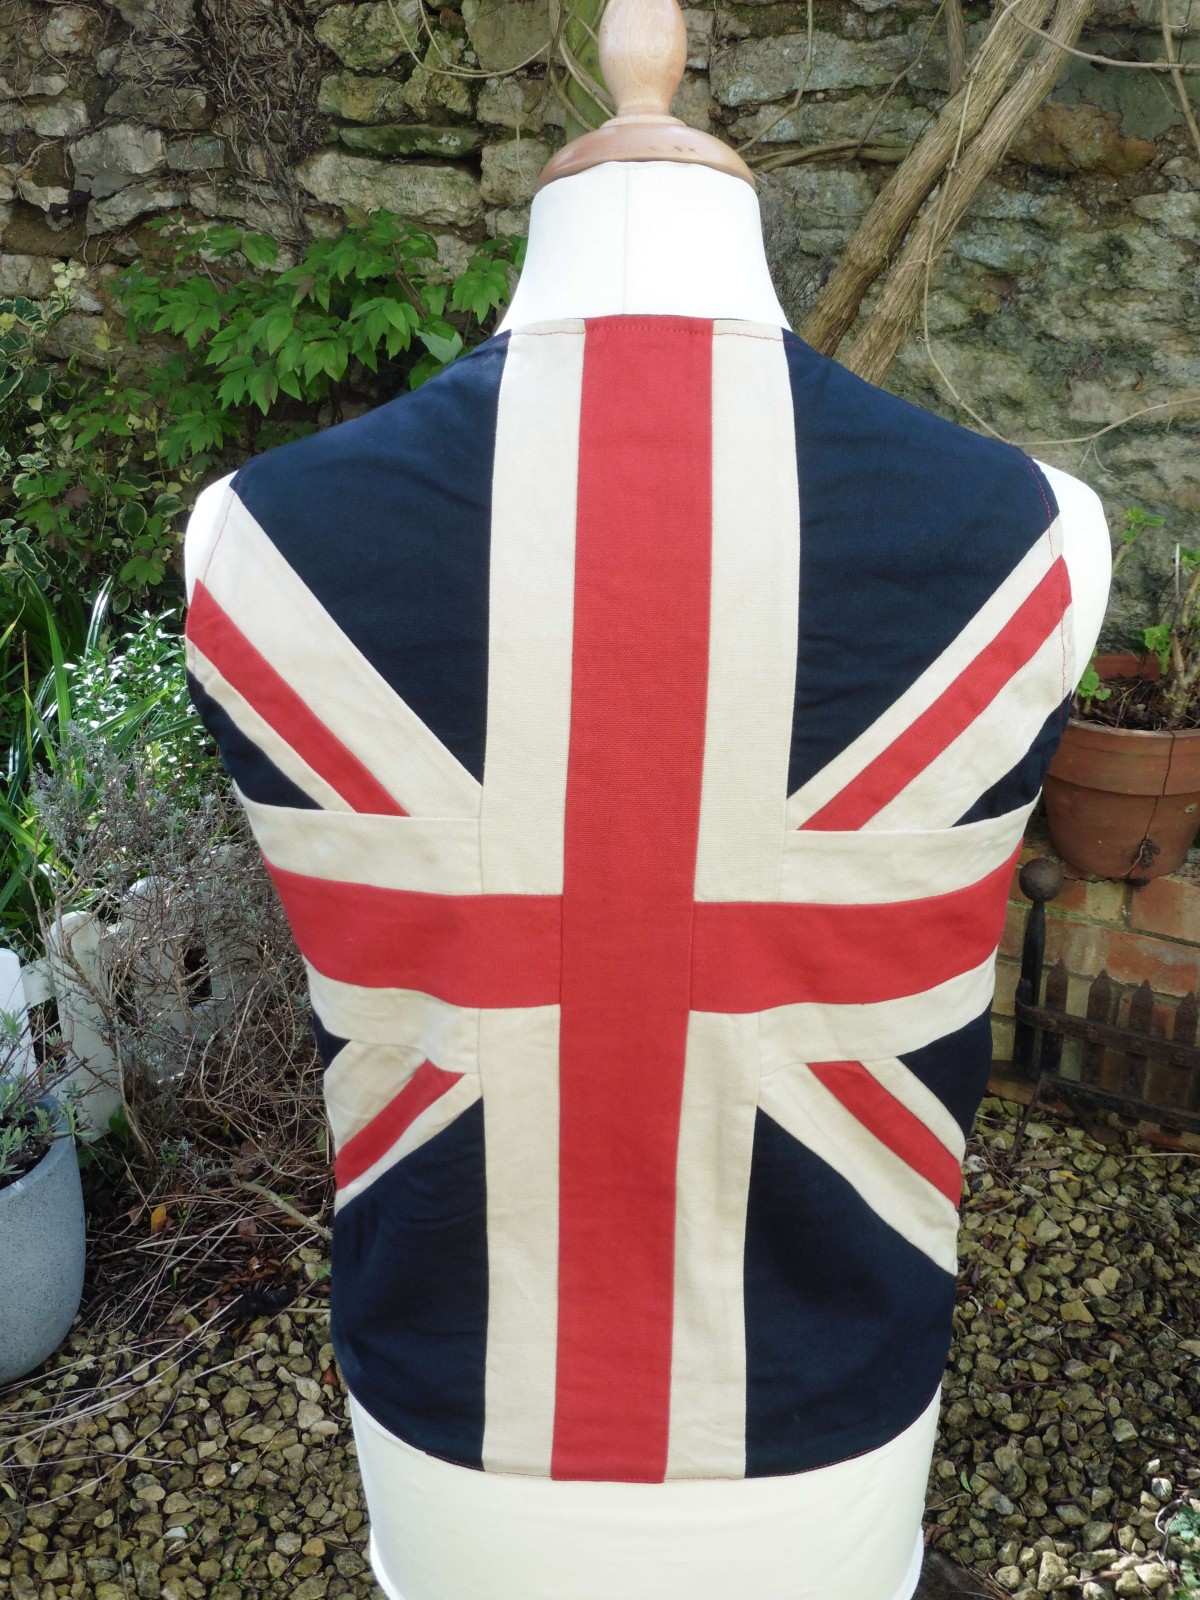 Union Jack Waistcoat in a reversible patriotic design